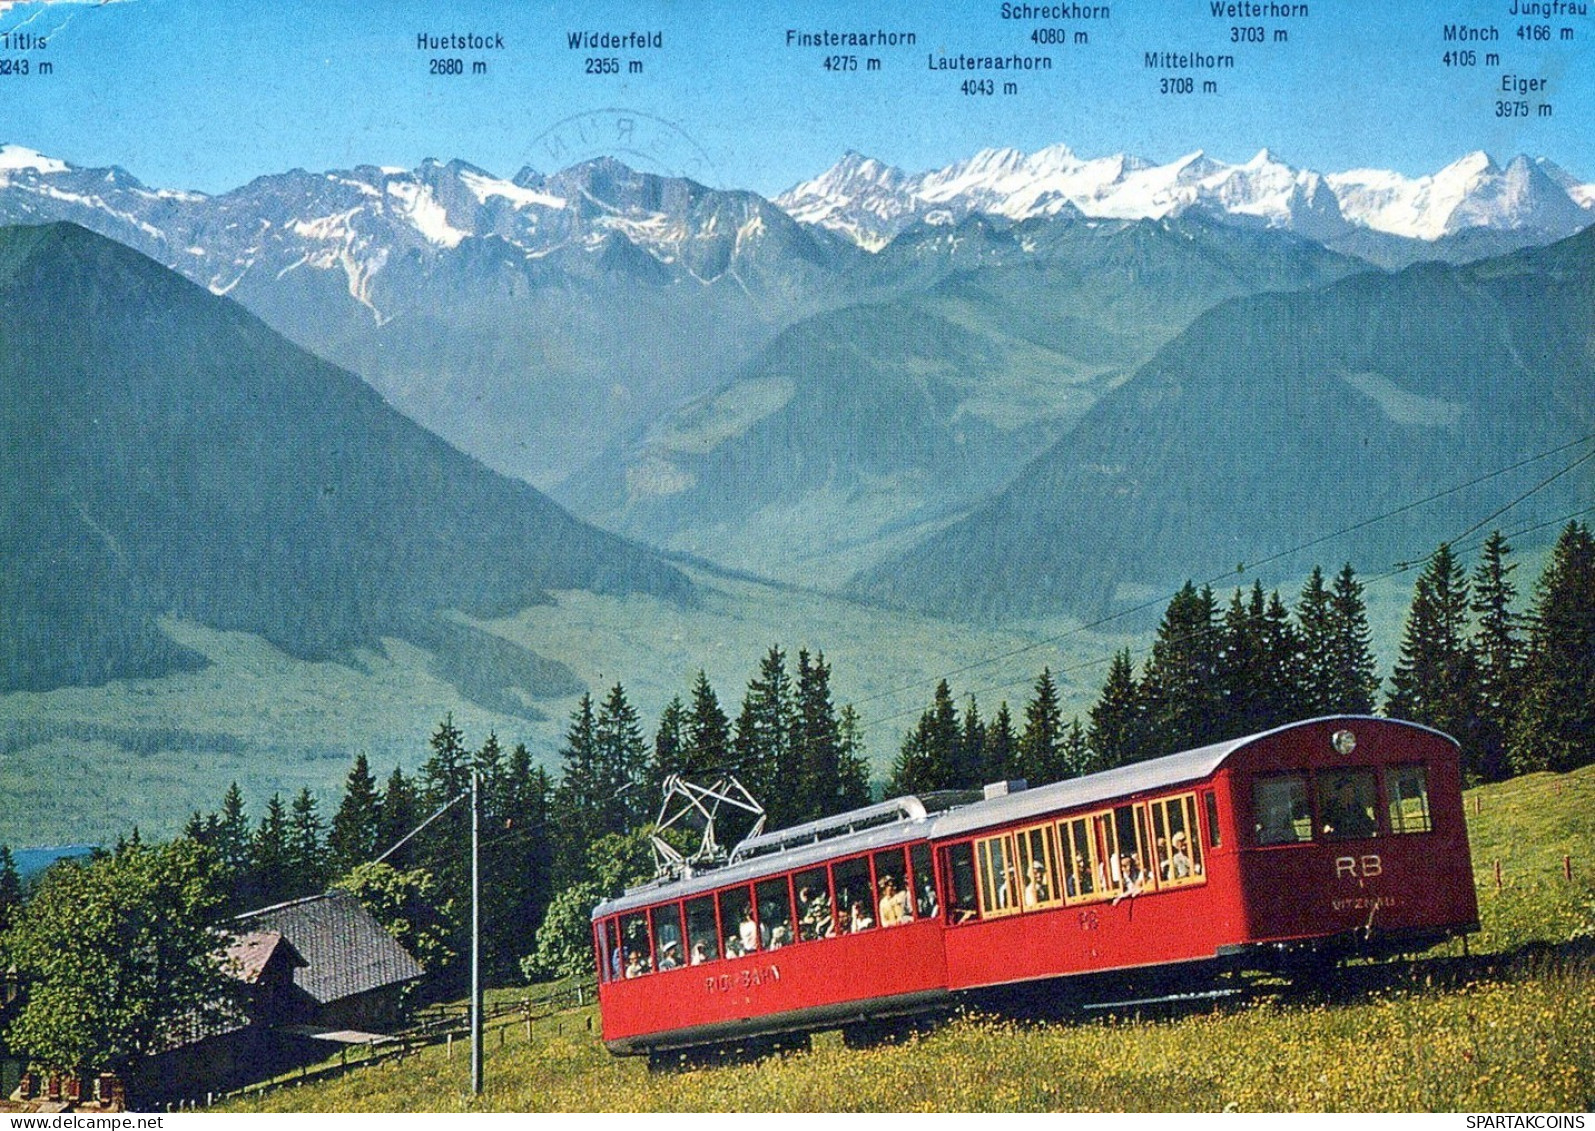 TRAIN RAILWAY Transport Vintage Postcard CPSM #PAA912.A - Trains